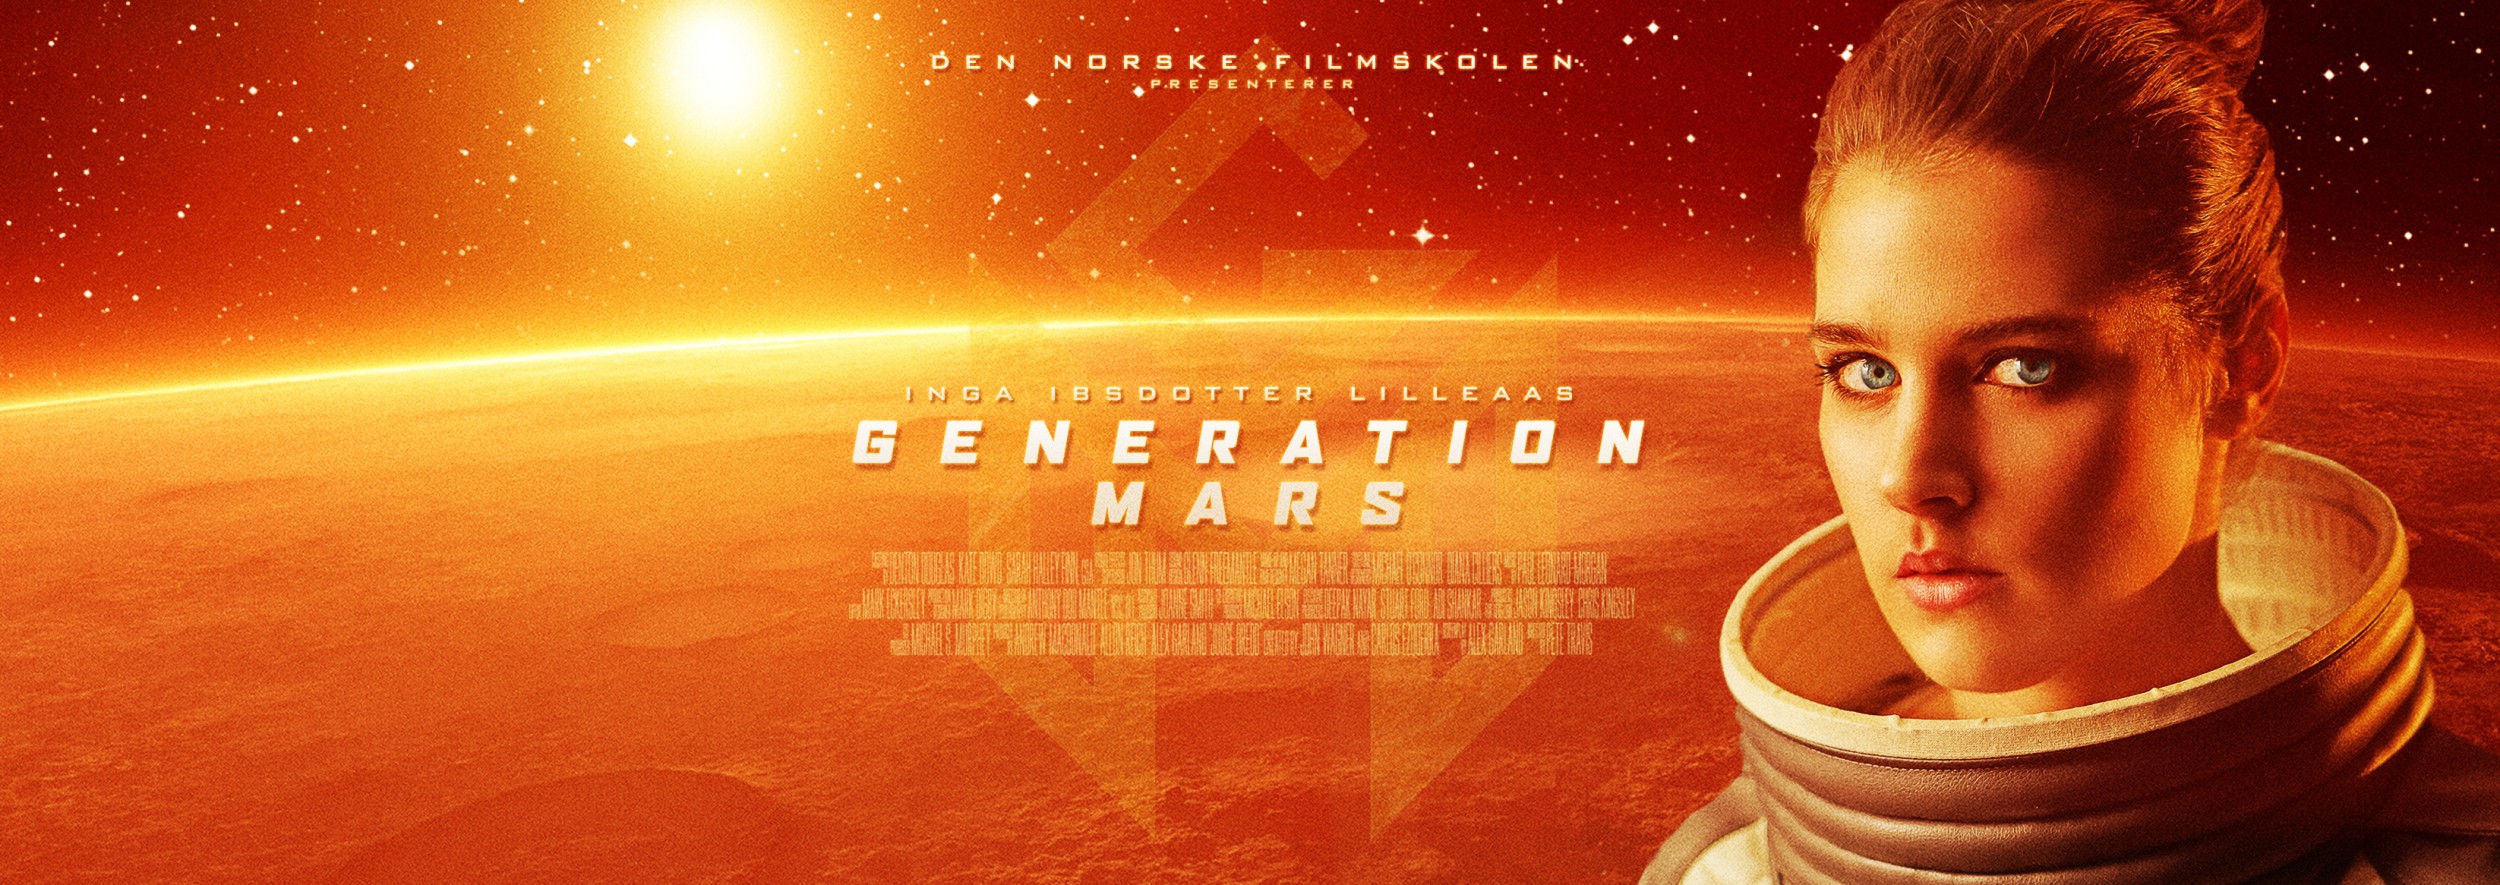 Mega Sized Movie Poster Image for Generation Mars